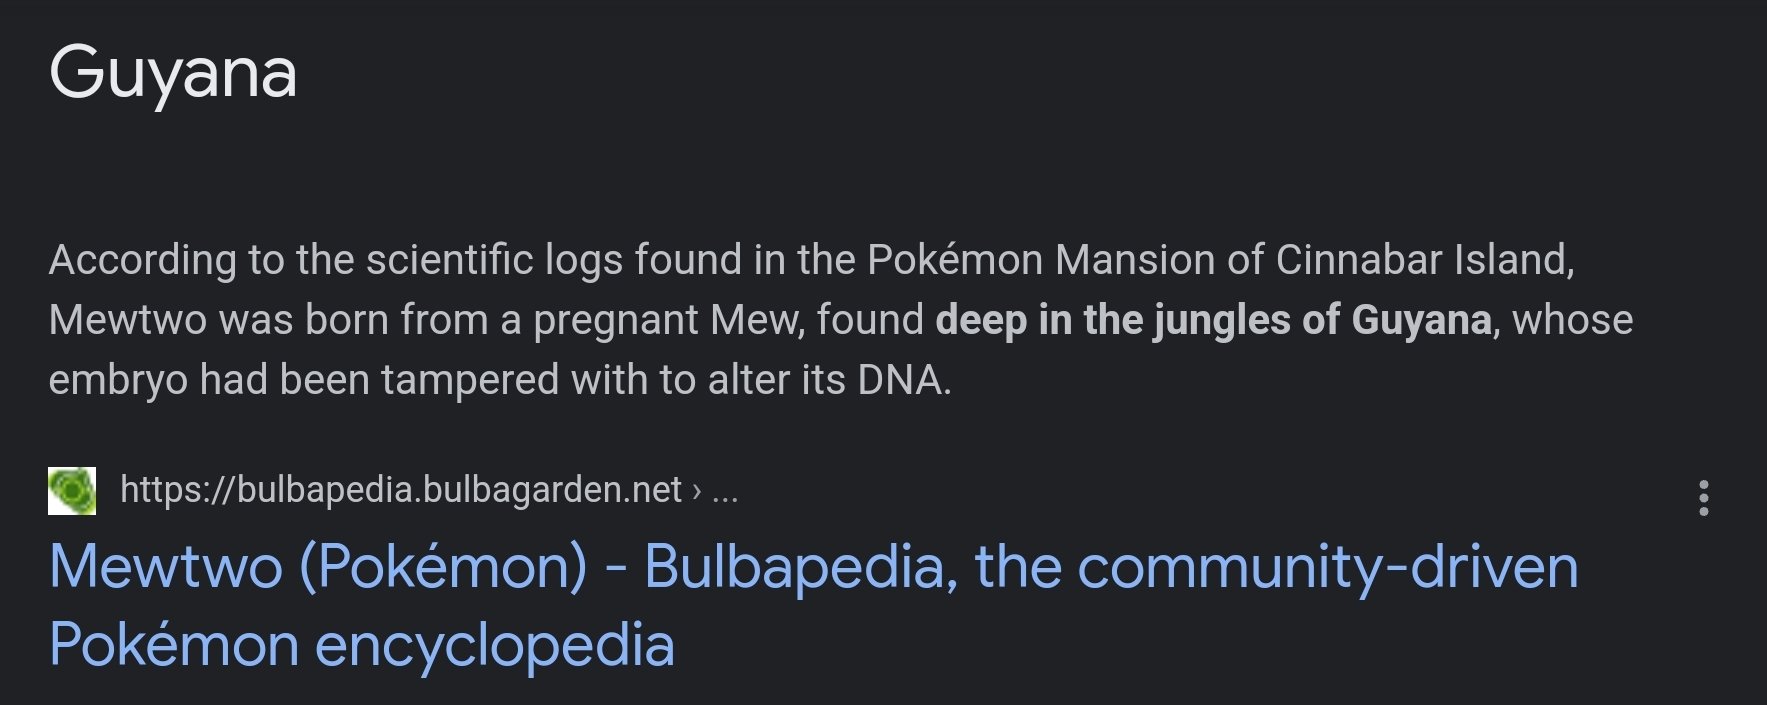 M21 - Bulbapedia, the community-driven Pokémon encyclopedia